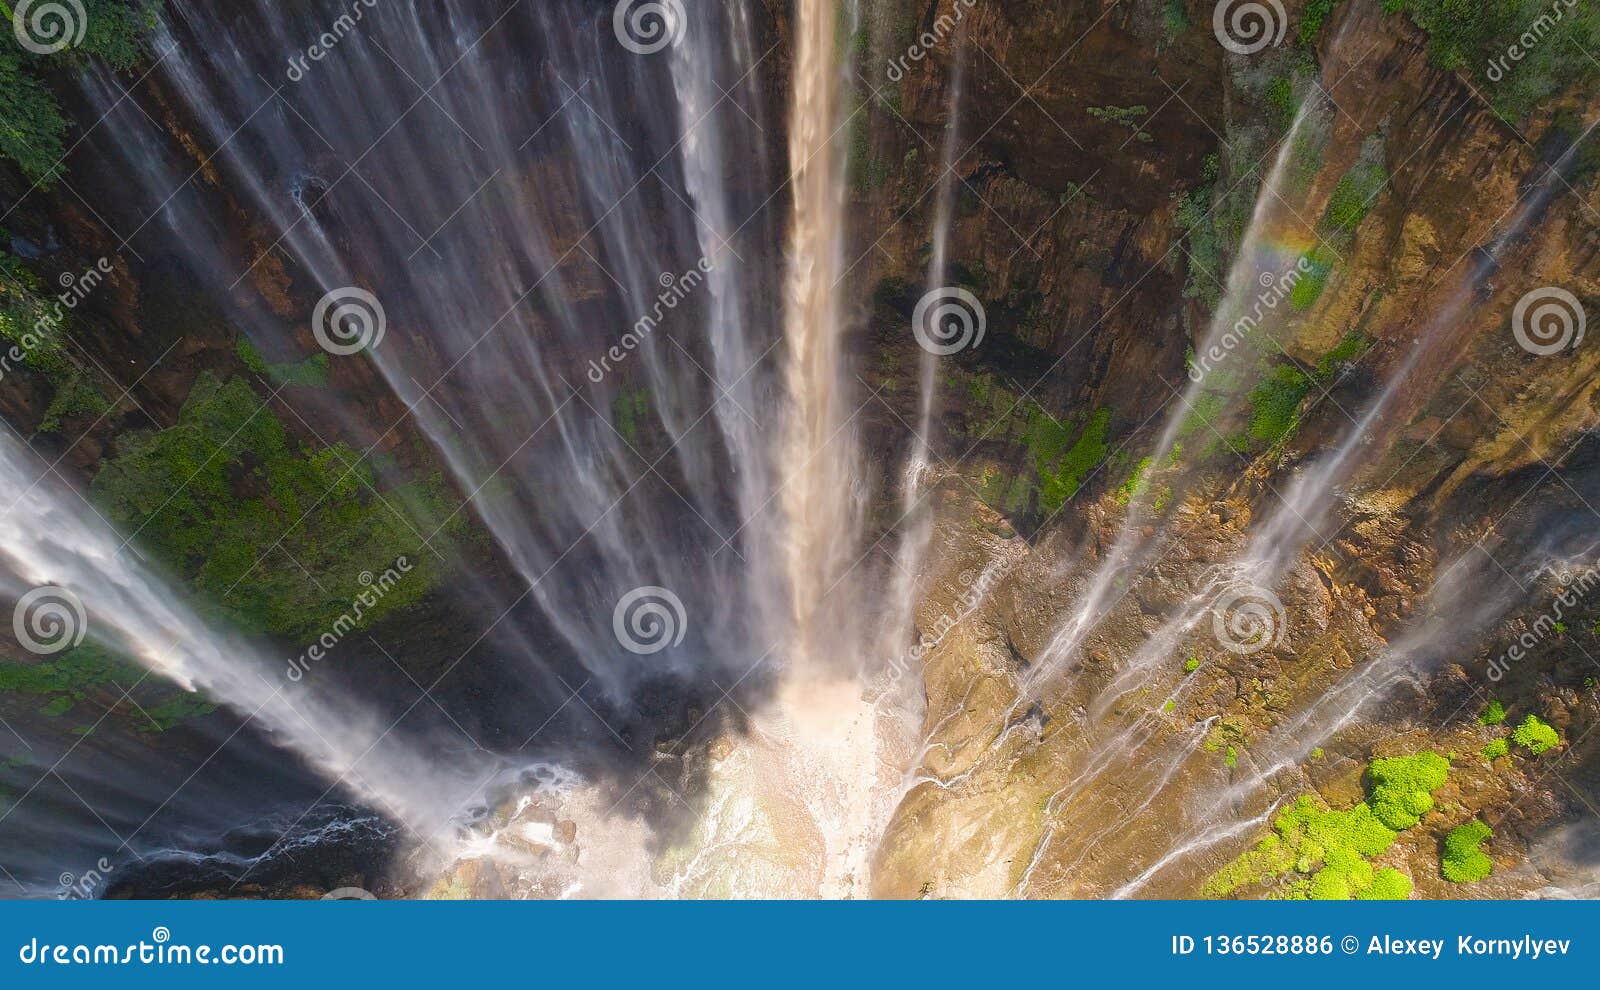 waterfall coban sewu java indonesia